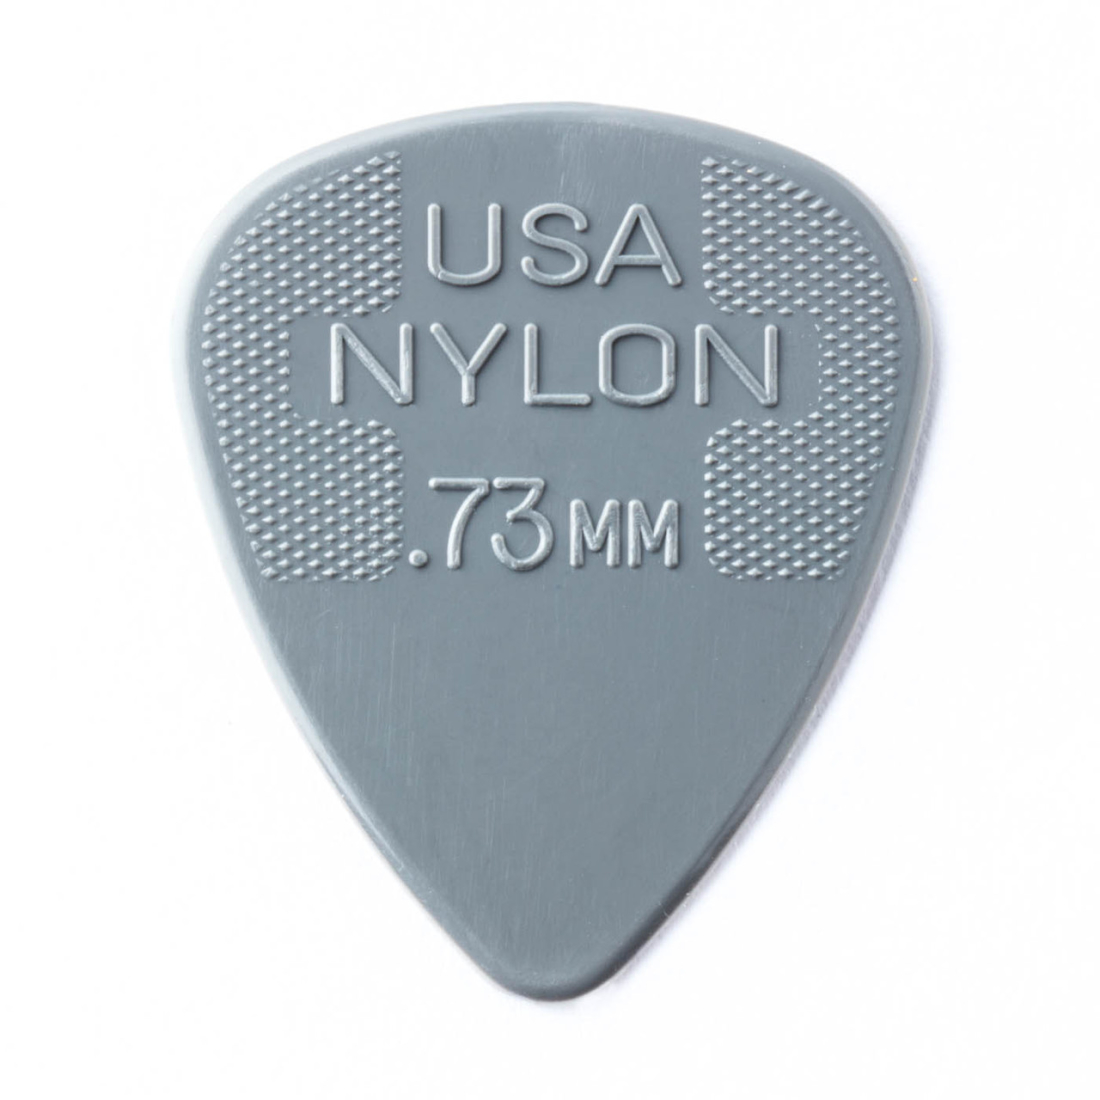 Nylon Standard Player Pack (12 Pack) - .73mm